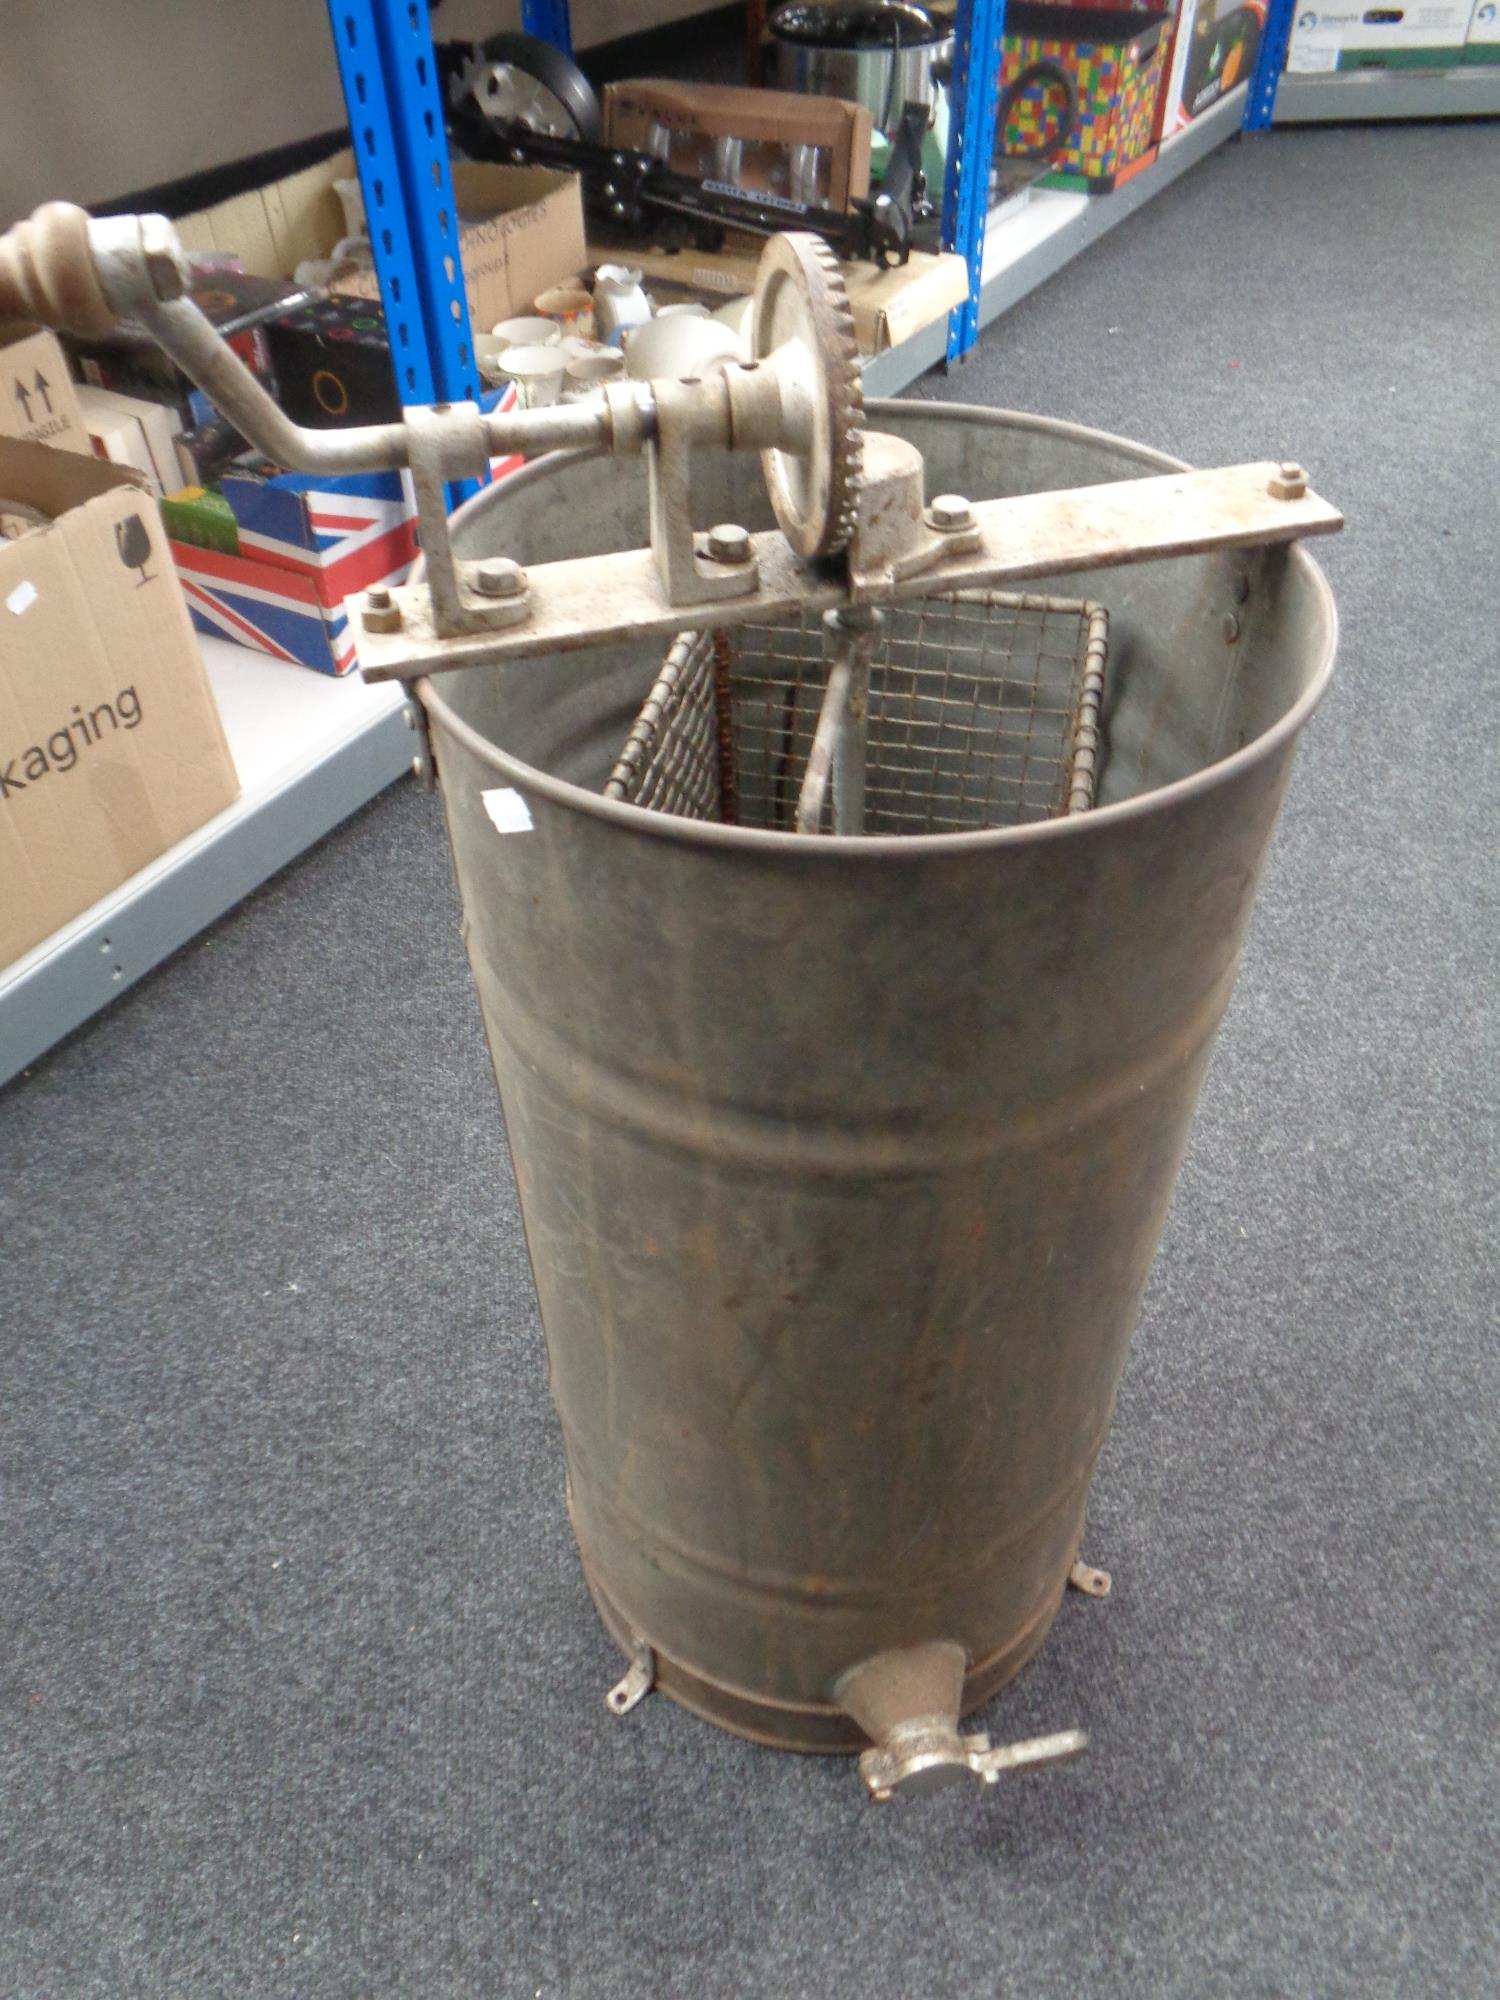 A vintage galvanized metal juicer